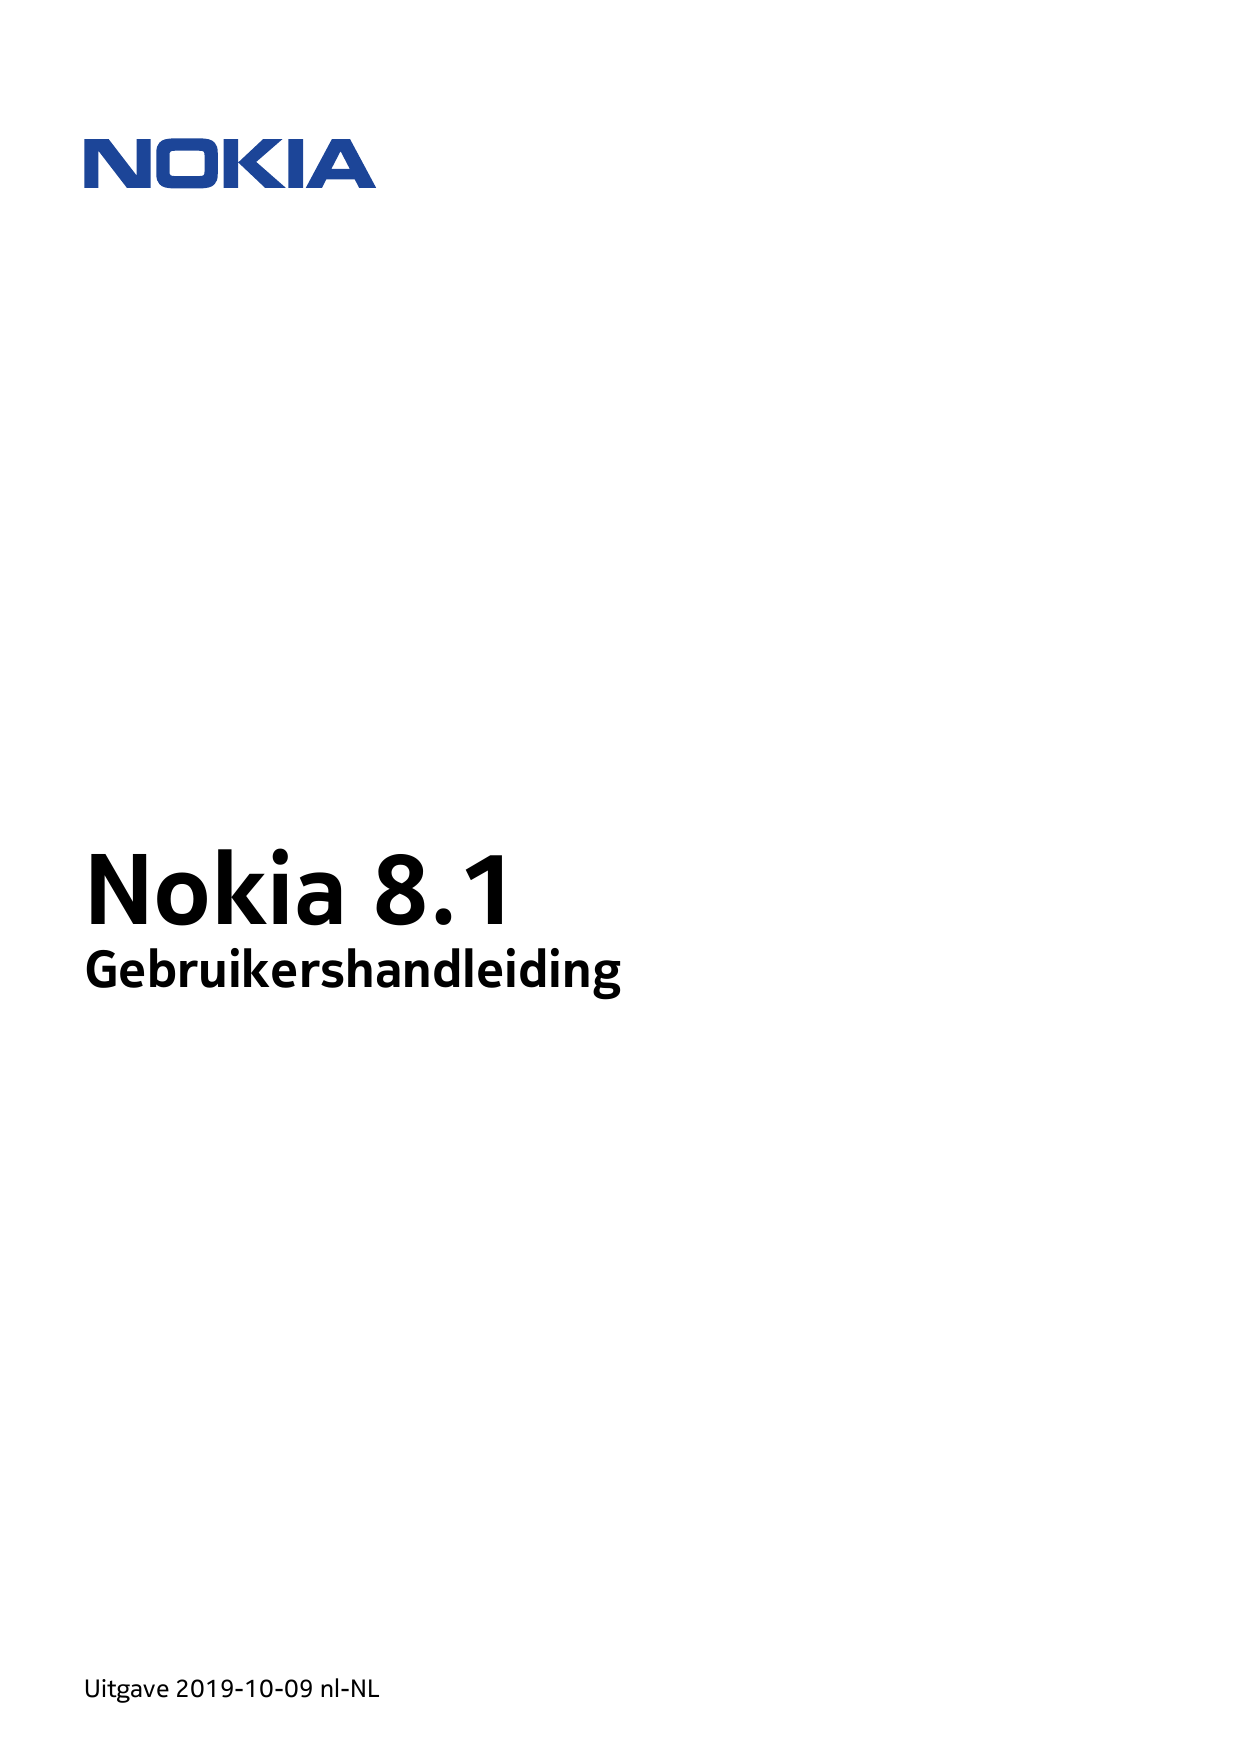 Nokia 8.1GebruikershandleidingUitgave 2019-10-09 nl-NL